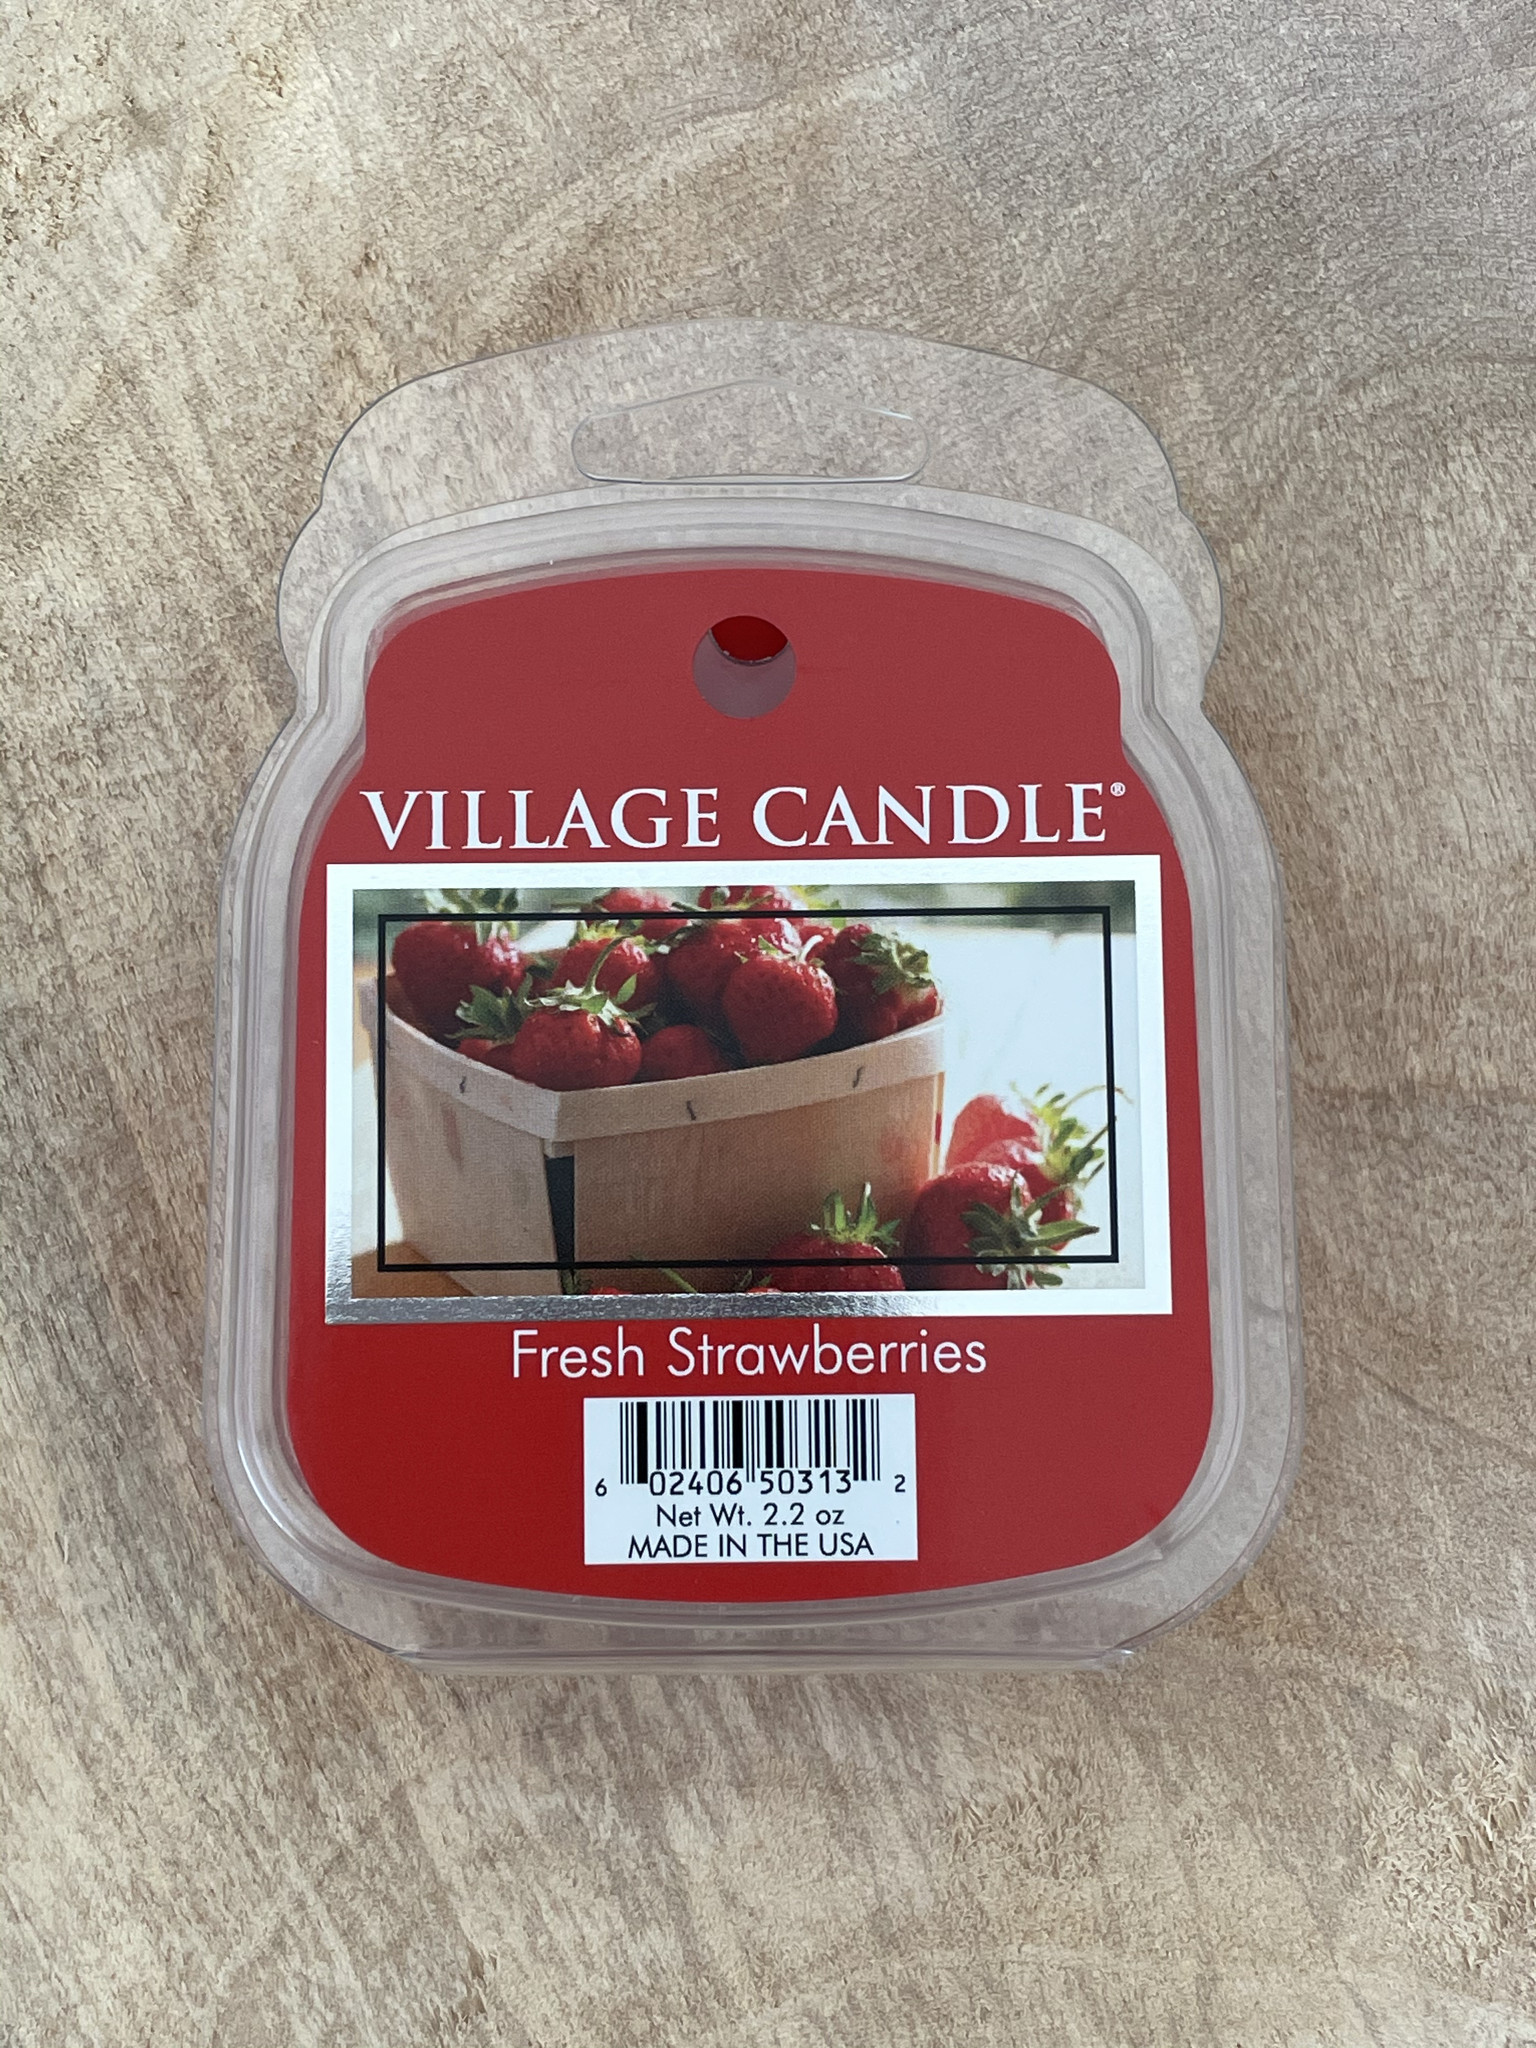 Village Candle Village Candle Fresh Strawberries Wax Melt